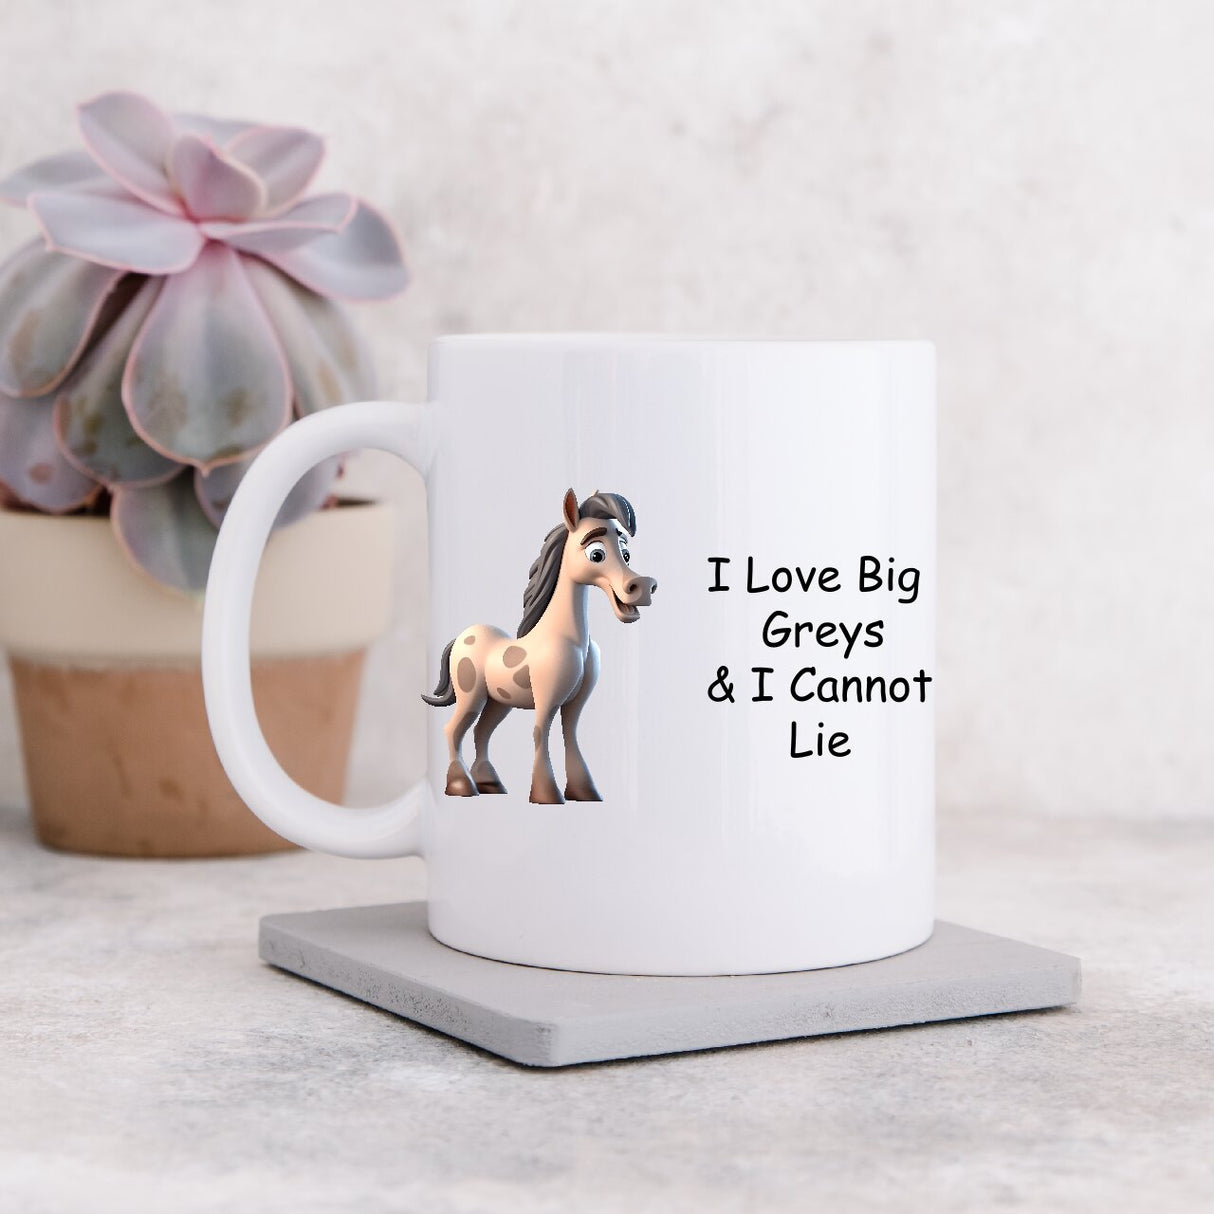 Copy of I Love Big Greys & I Cannot Lie - Coffee Mug